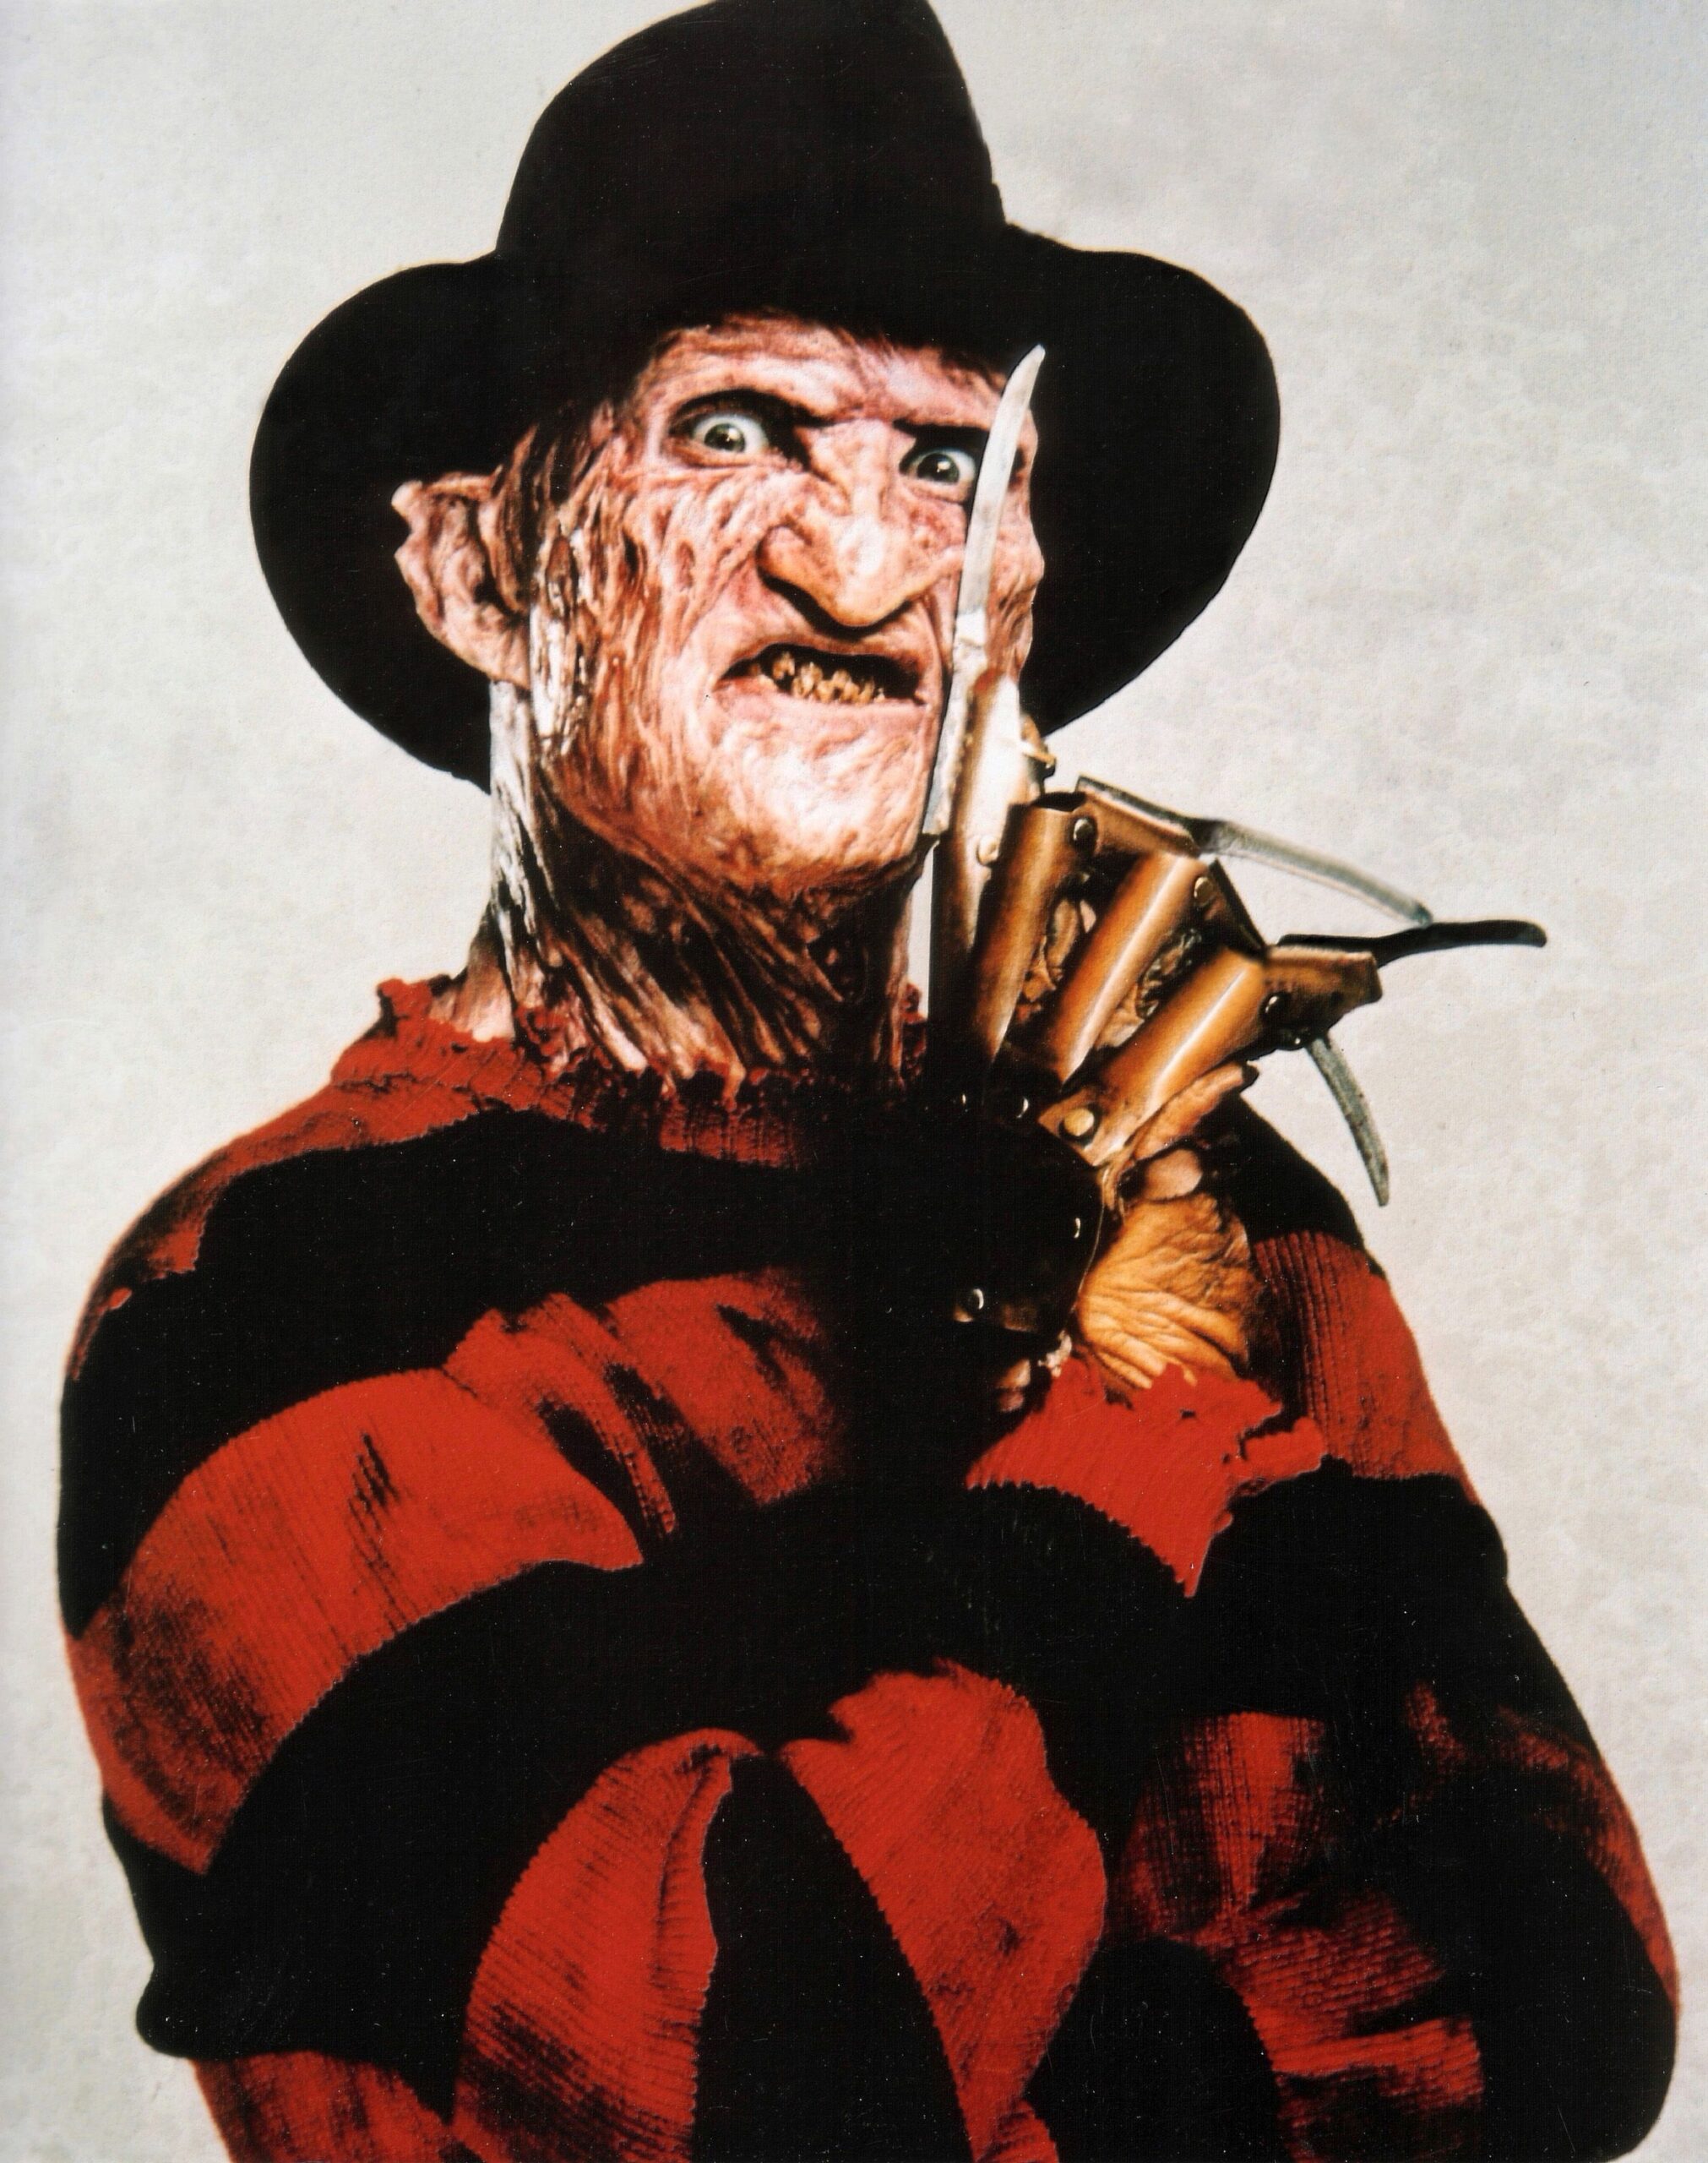 Freddy Krueger - A Nightmare On Elm Street